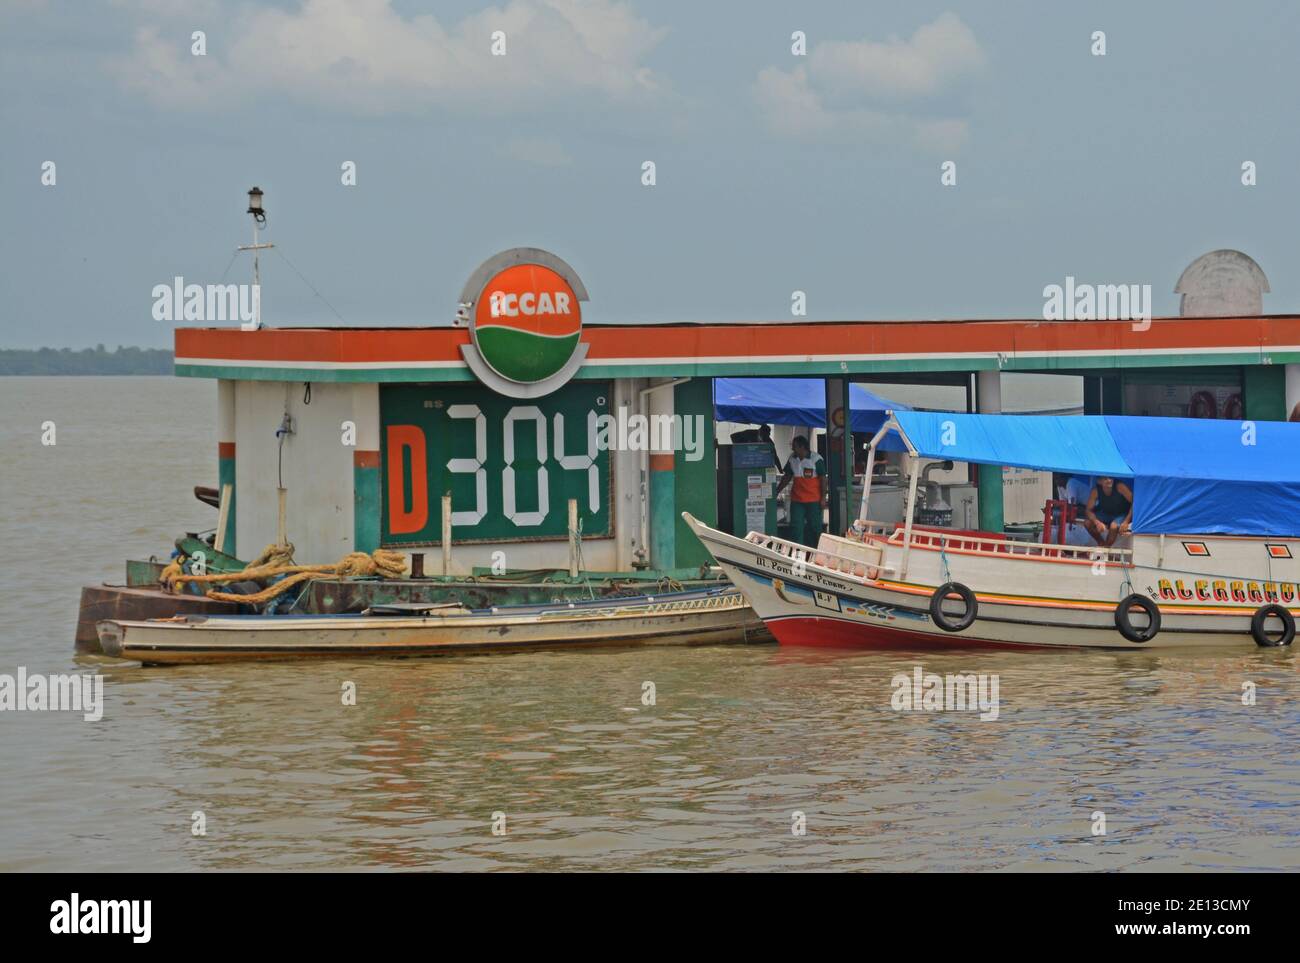 Iccar petrol station on Guama river, Belem, Para, Brazil Stock Photo